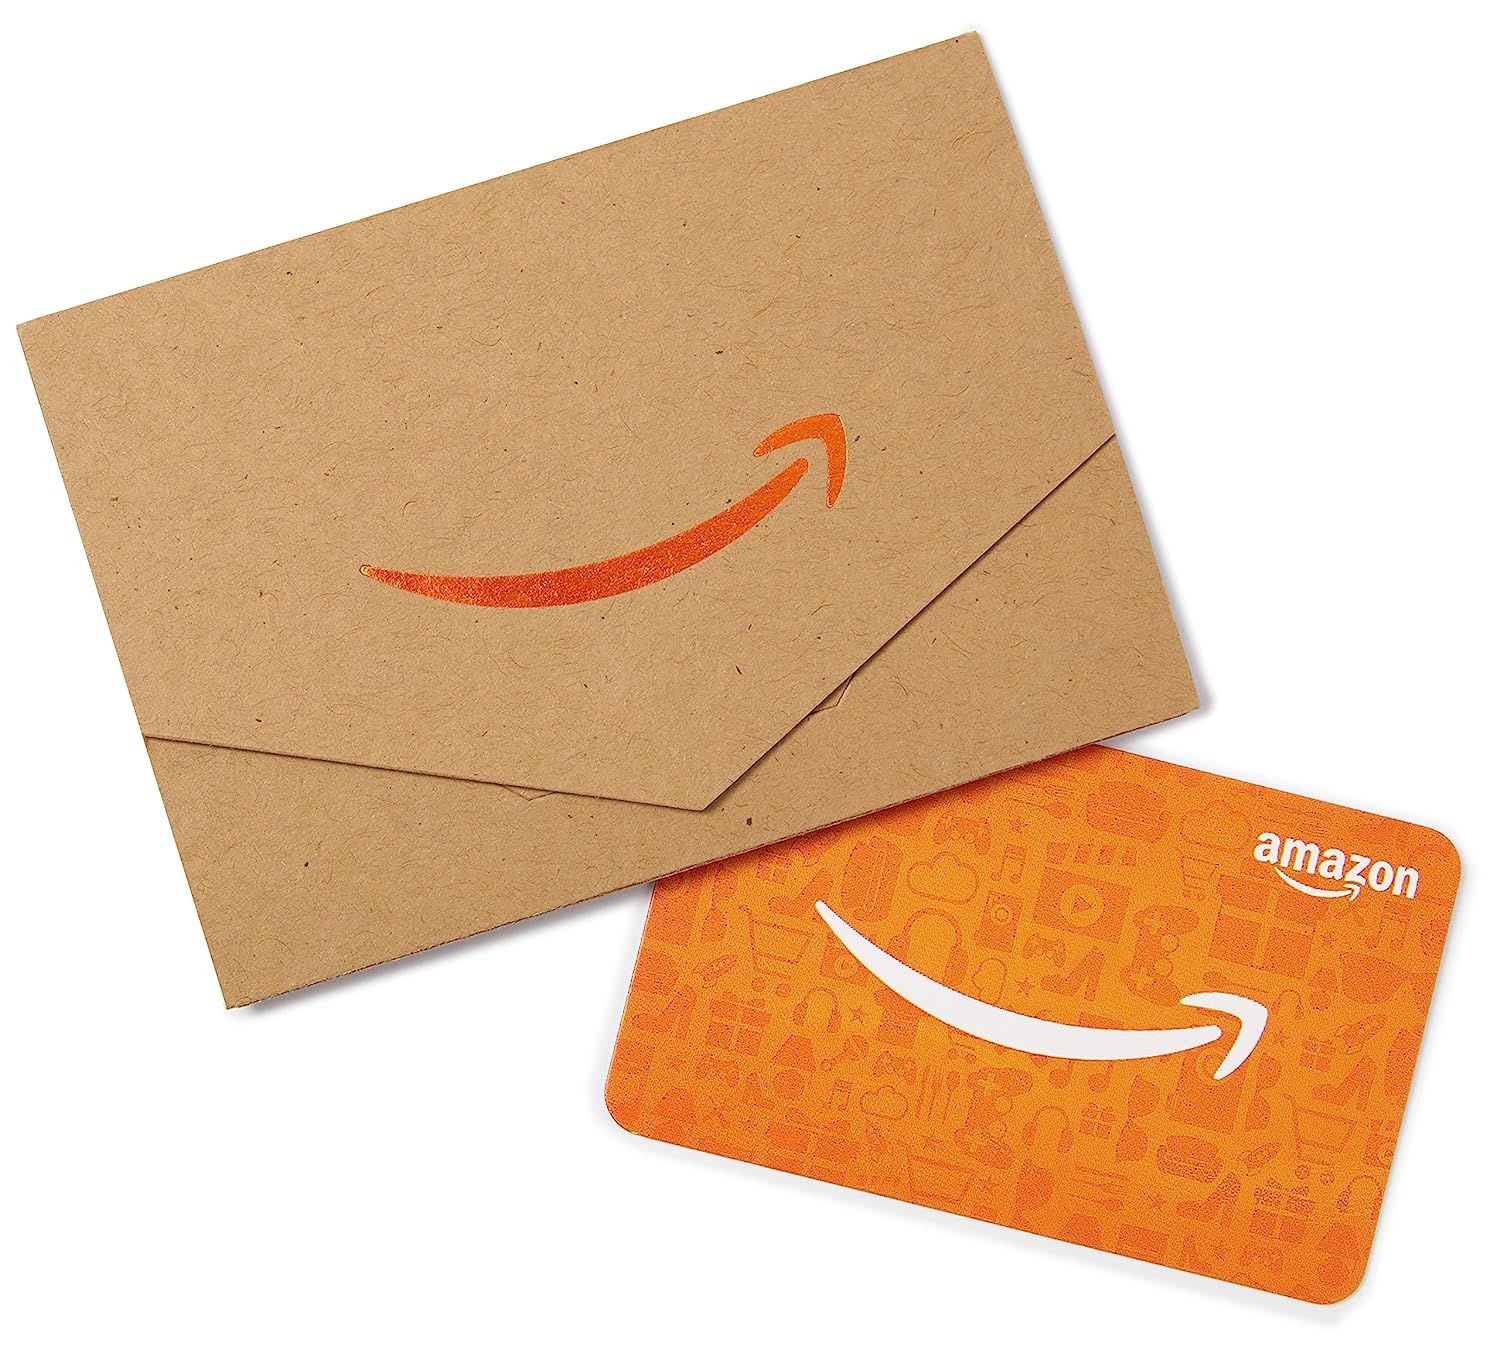 Amazon.com Gift Card in a Mini Envelope | Amazon (US)